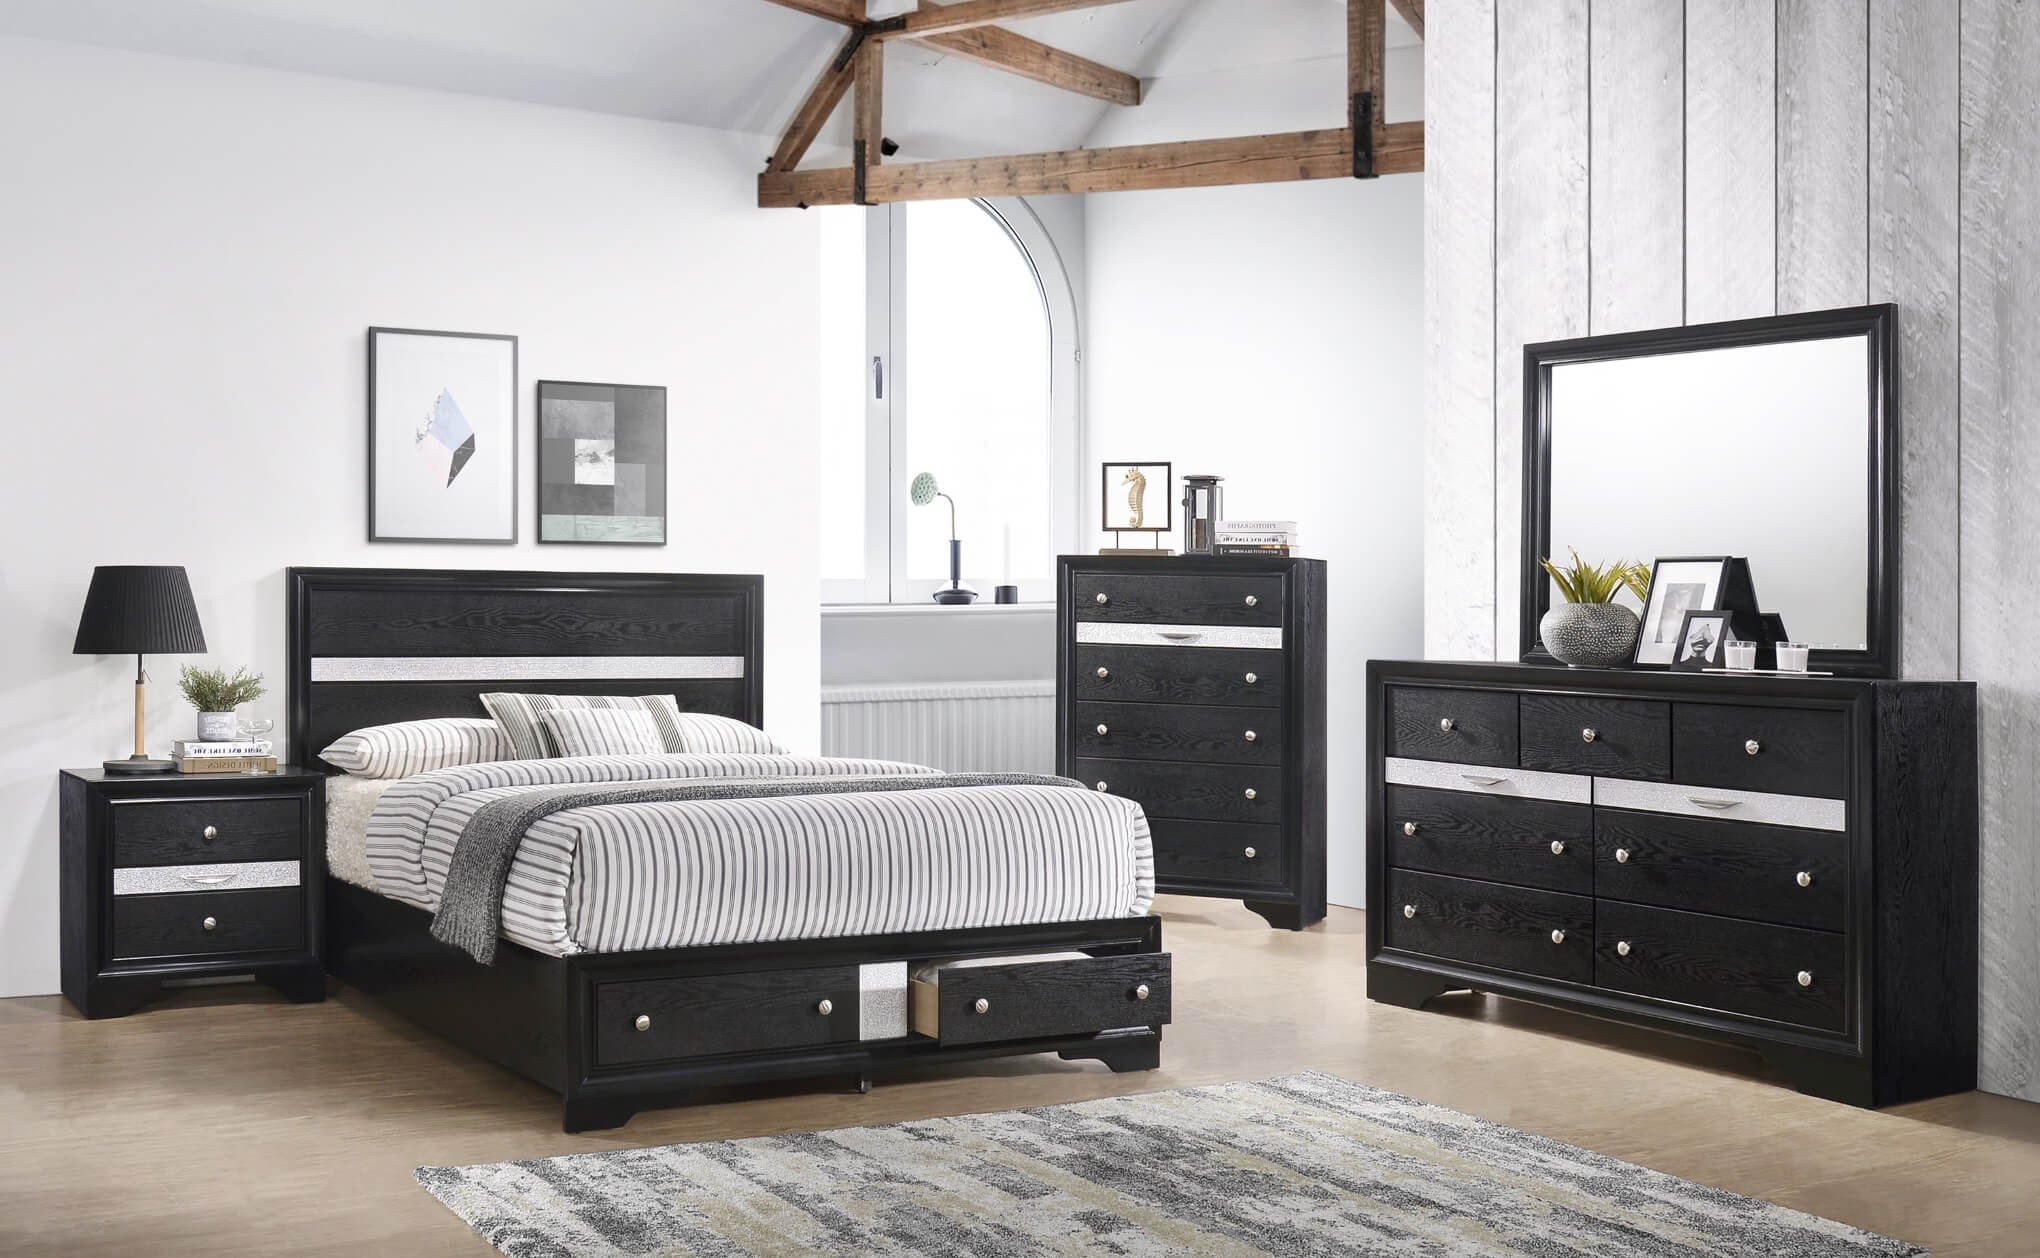 Storage Bedroom Furniture
 Regata Black Storage Bedroom Set